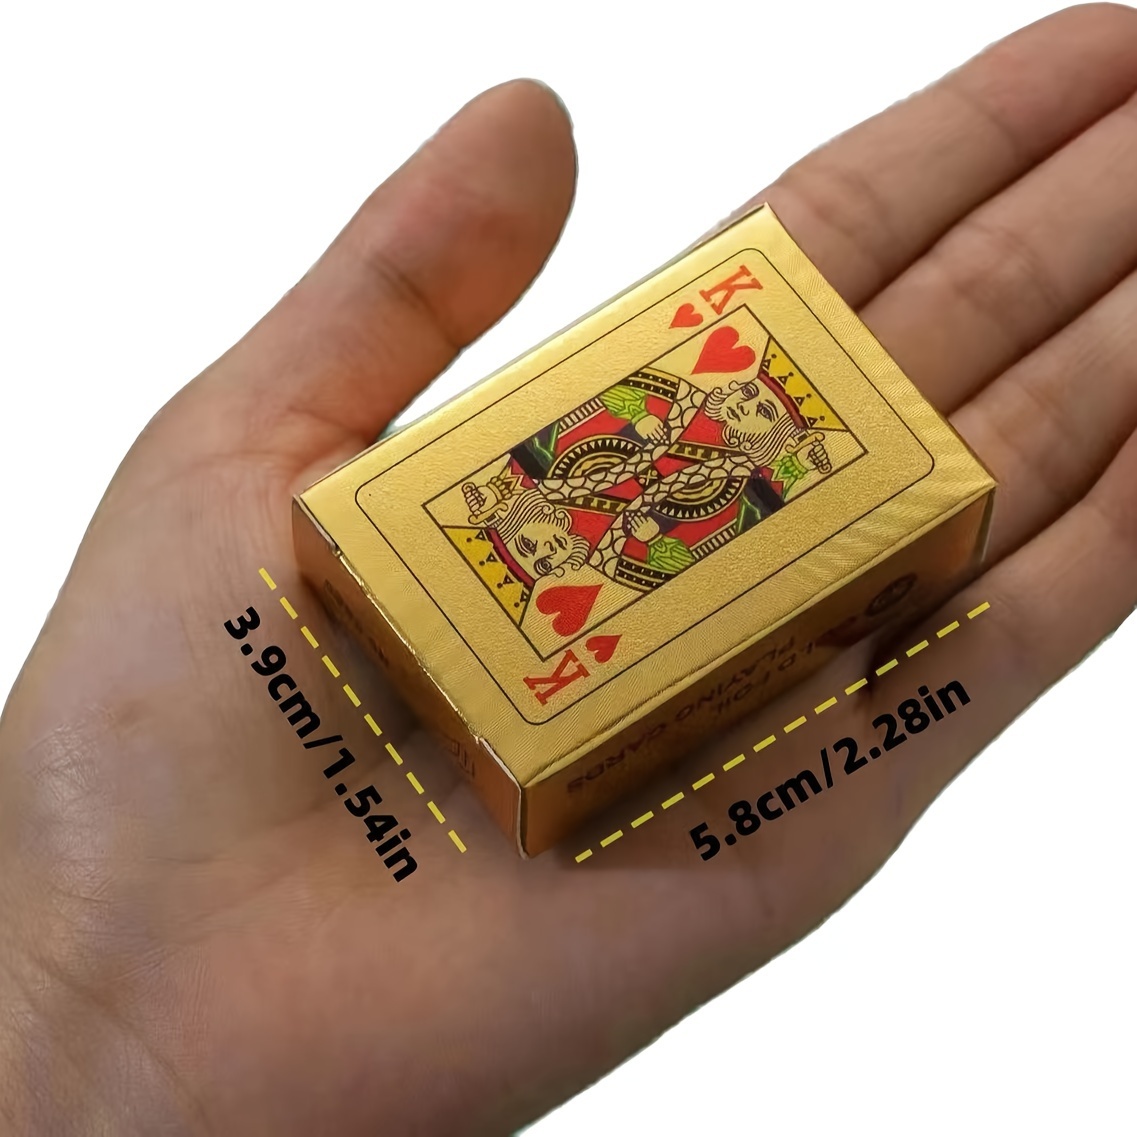 8 Set Super Mini Playing Cards Miniture Plastic Coated Tiny Poker Card Deck